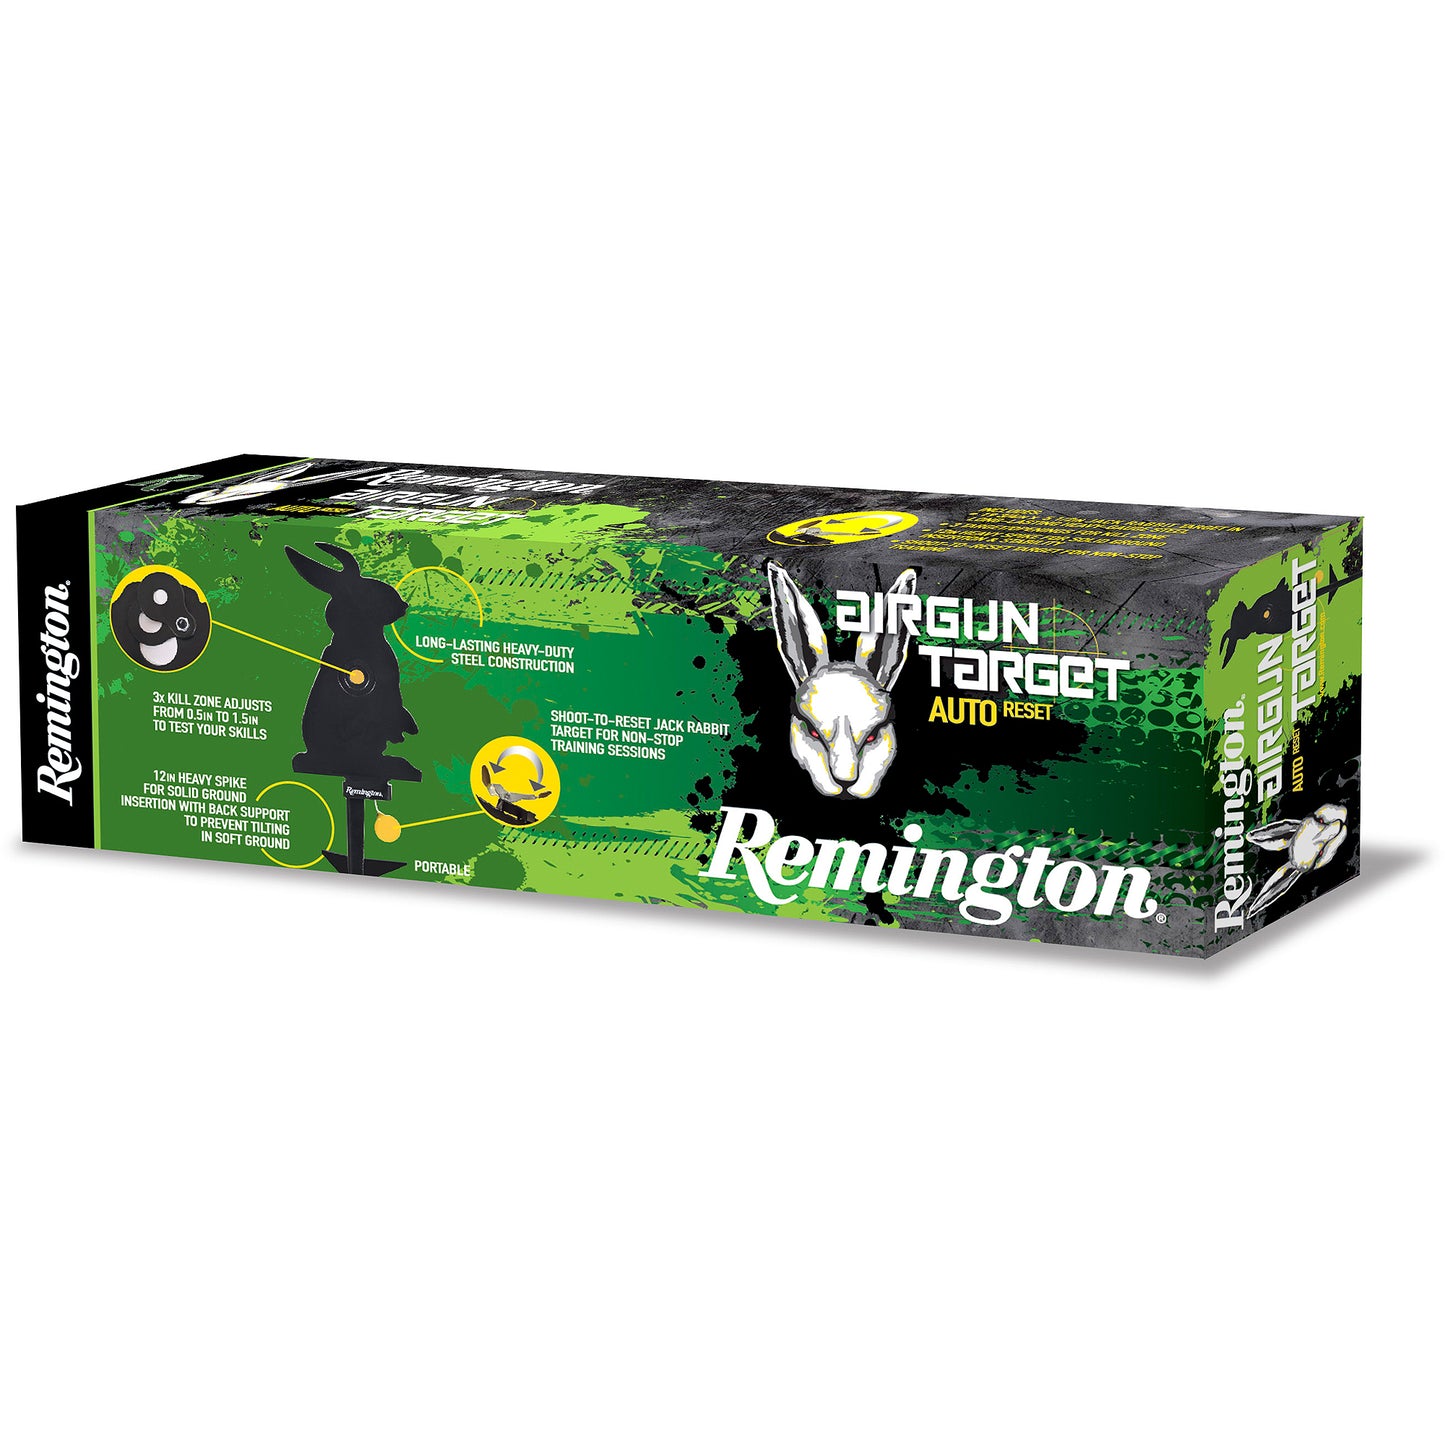 Remington Auto Reset